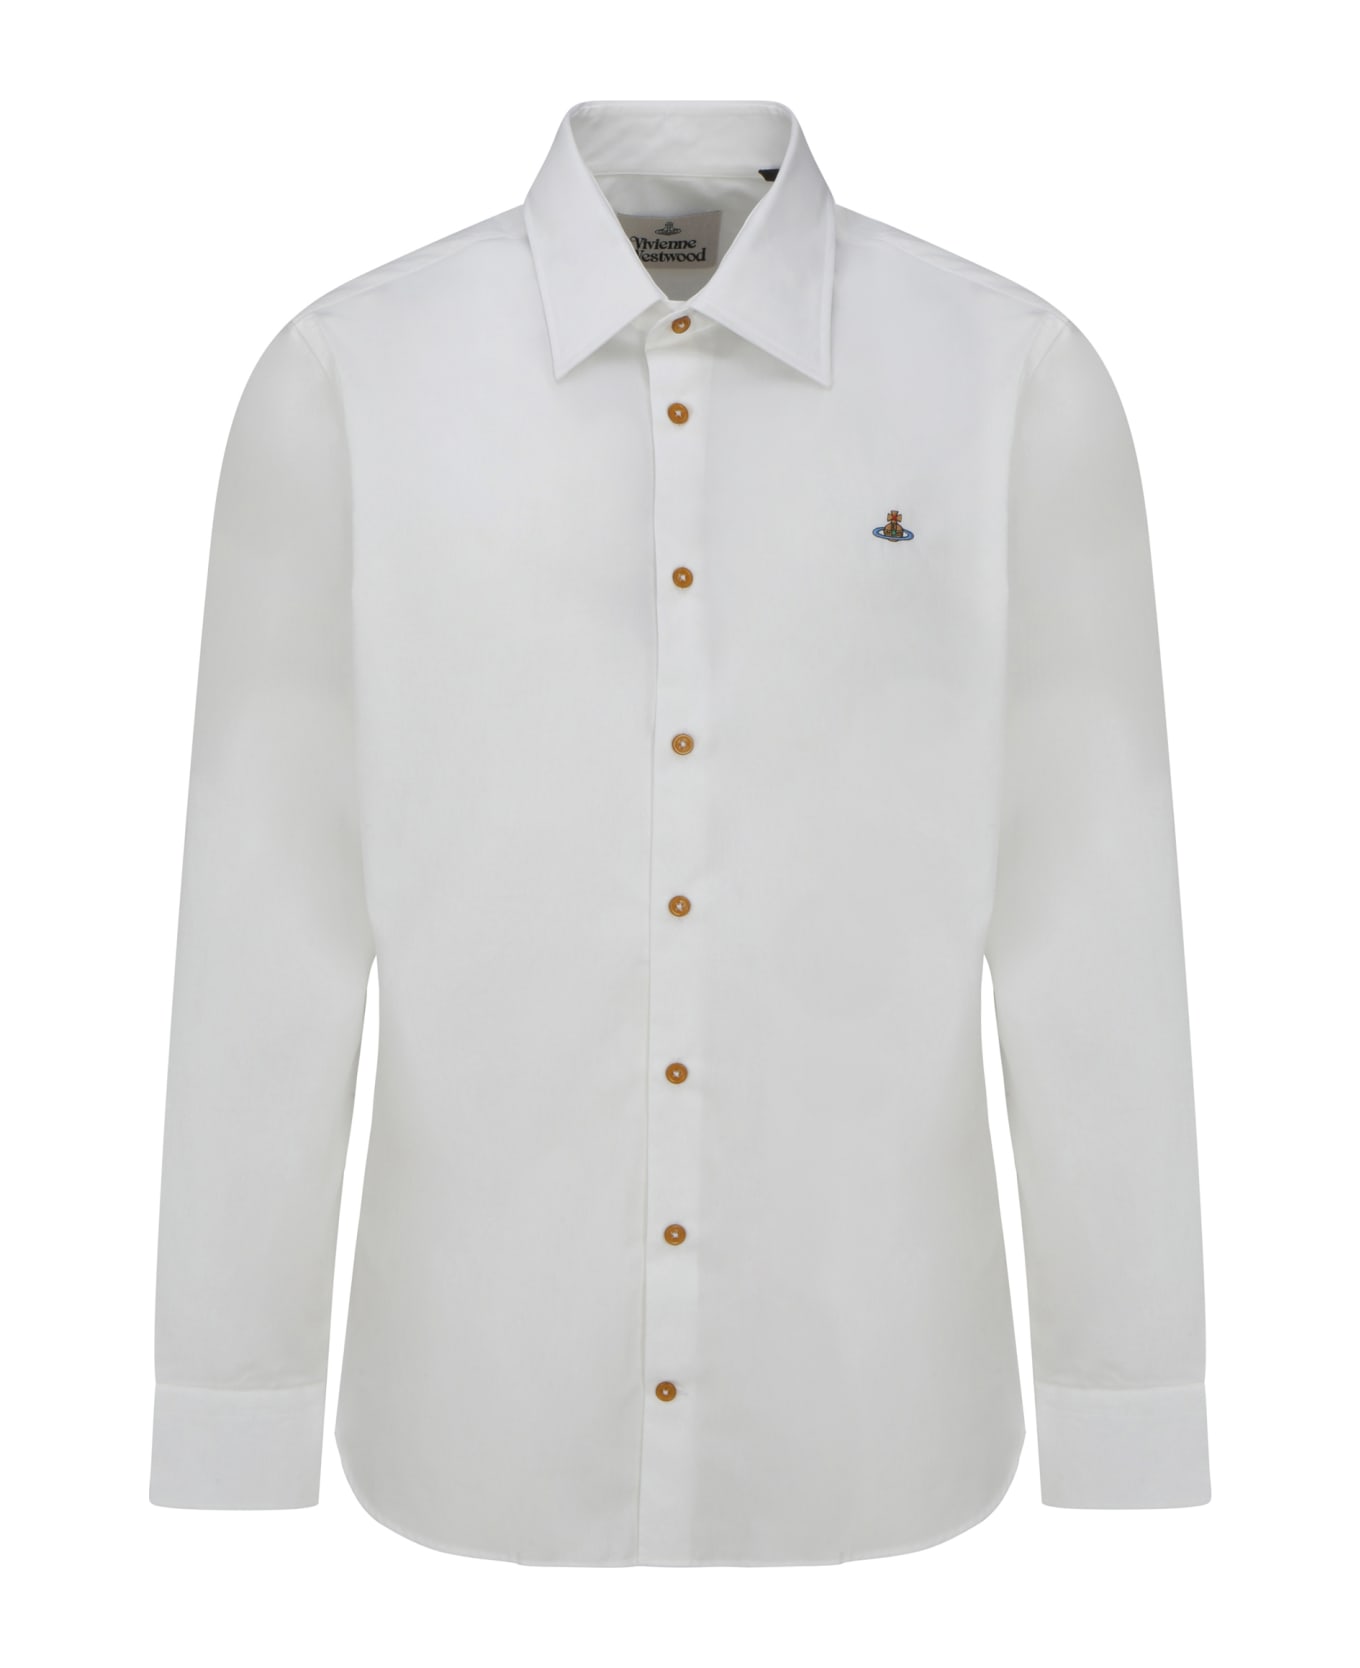 Vivienne Westwood Ghost Shirt - White